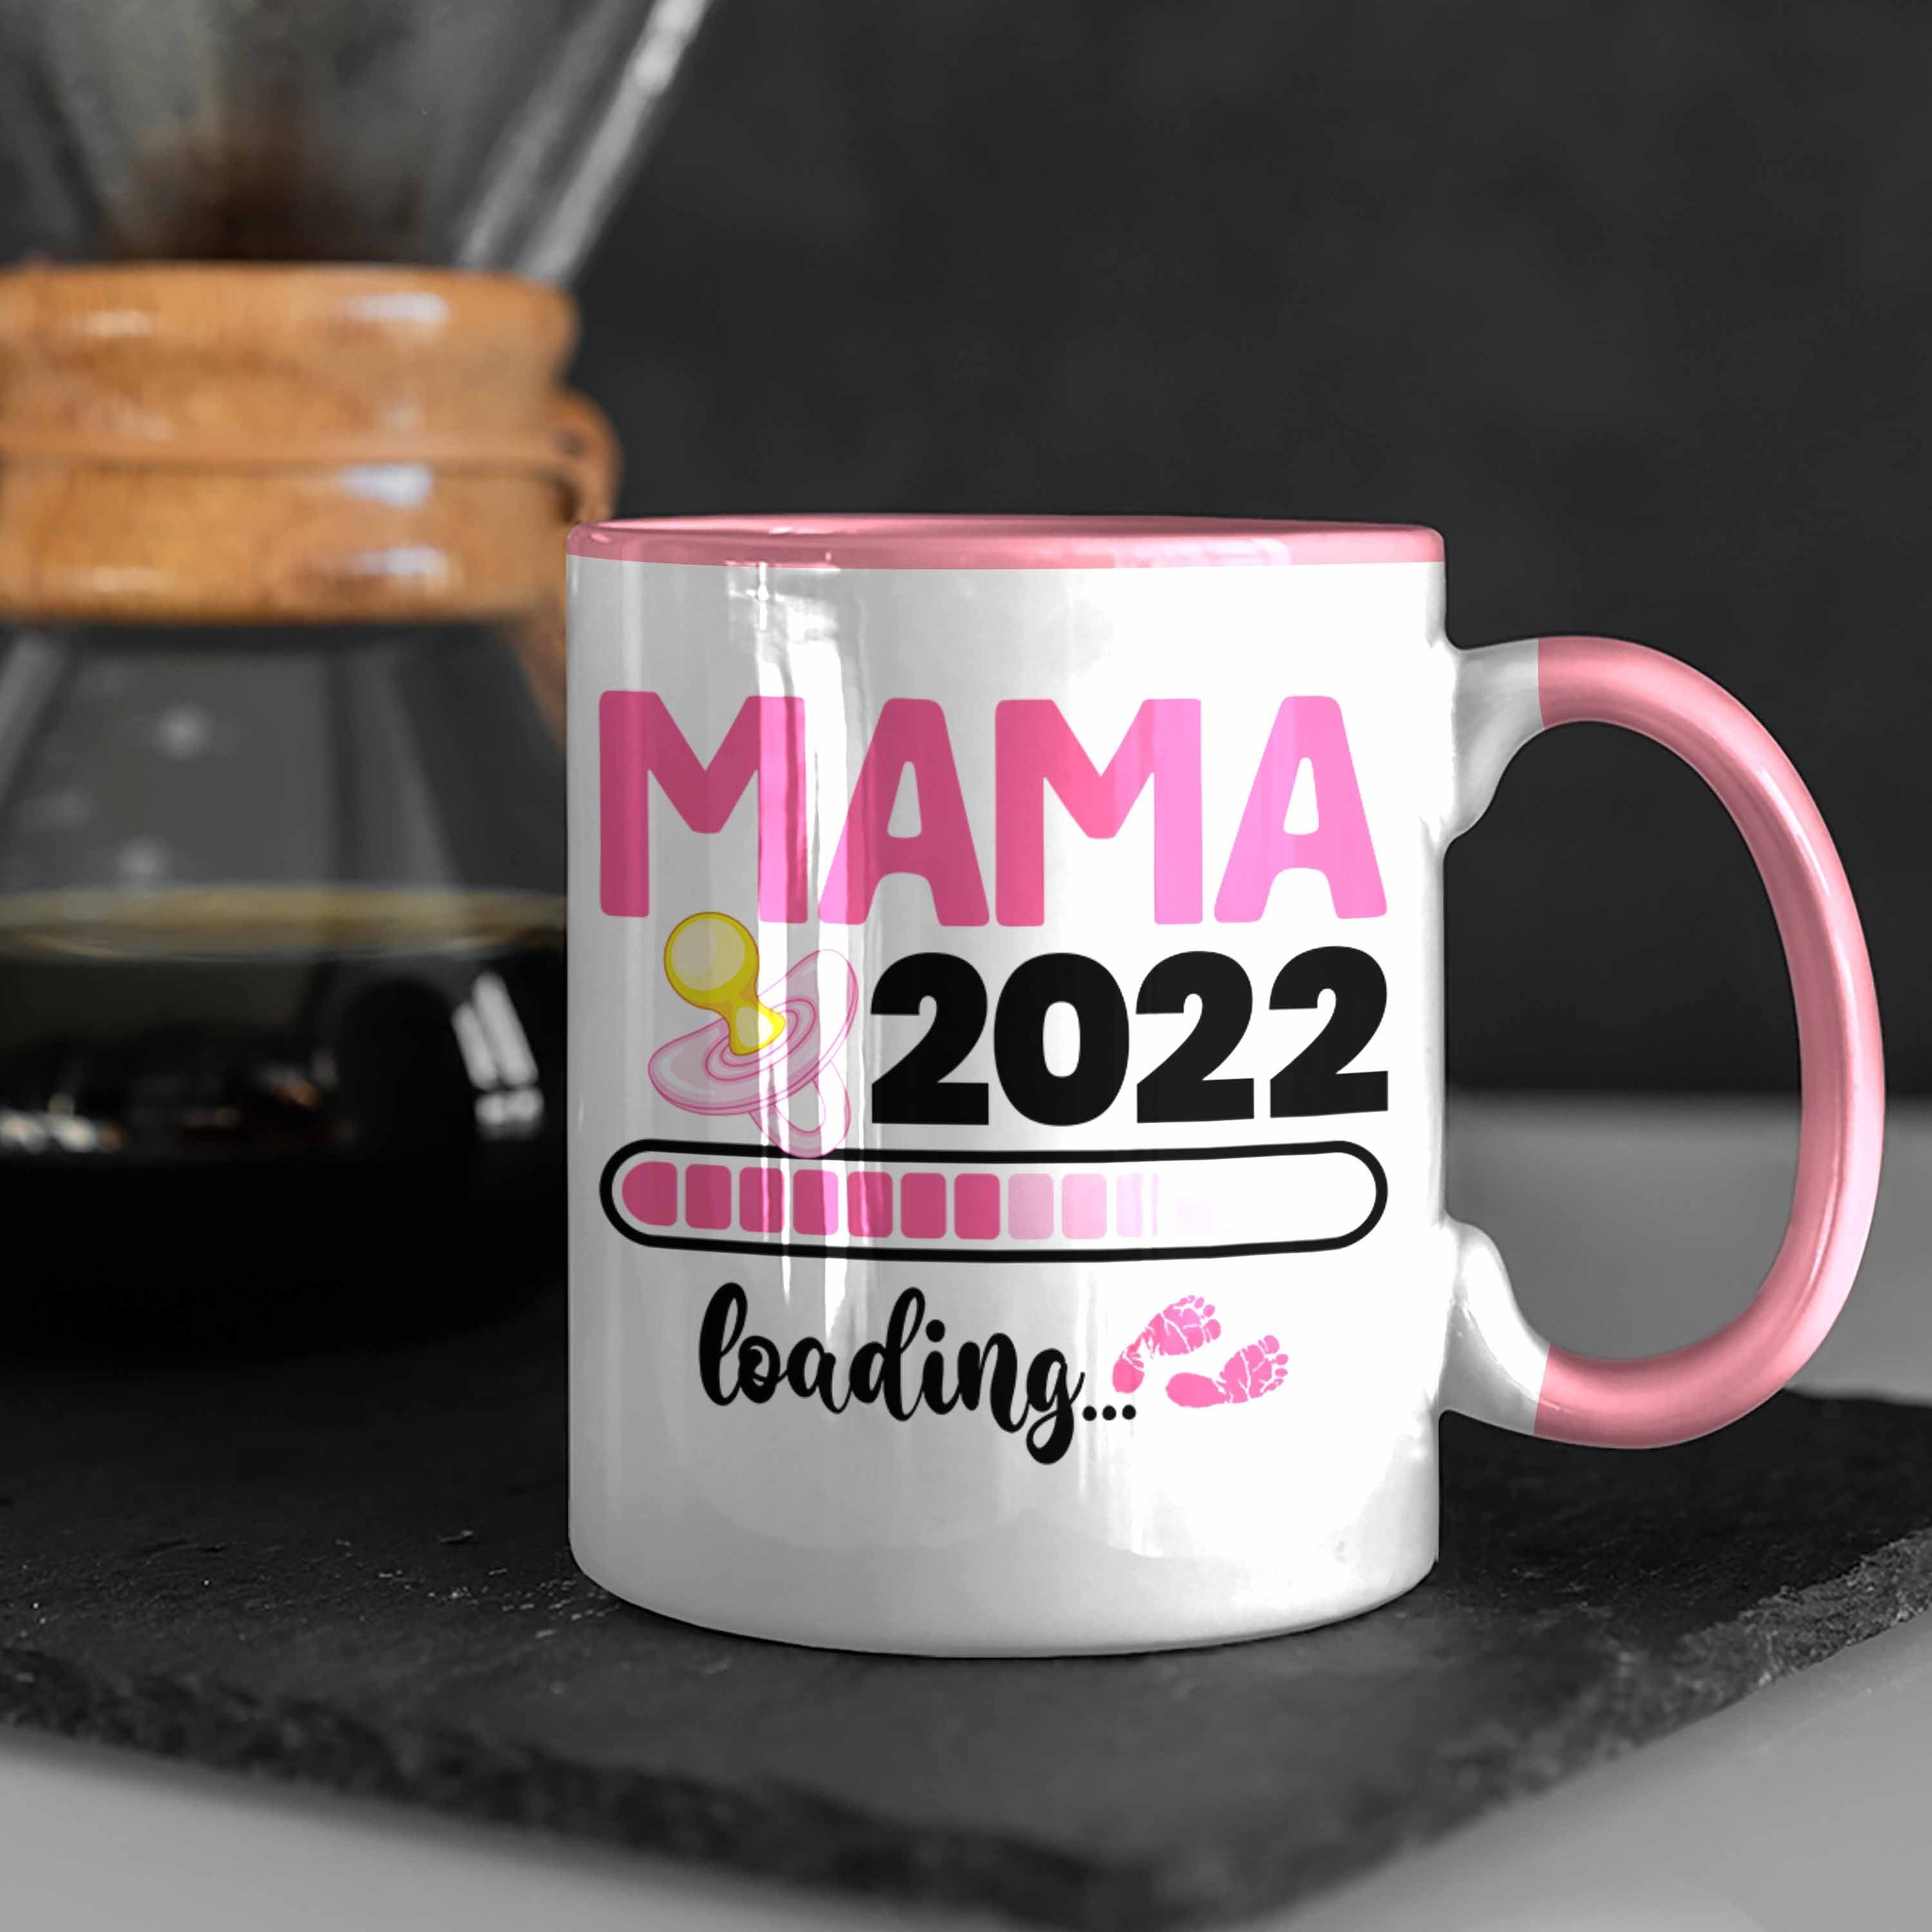 Trendation Tasse Trendation - Mama Tasse 2022 Rosa Loading Schwangerschaftsverkündung Schwanger Überraschung